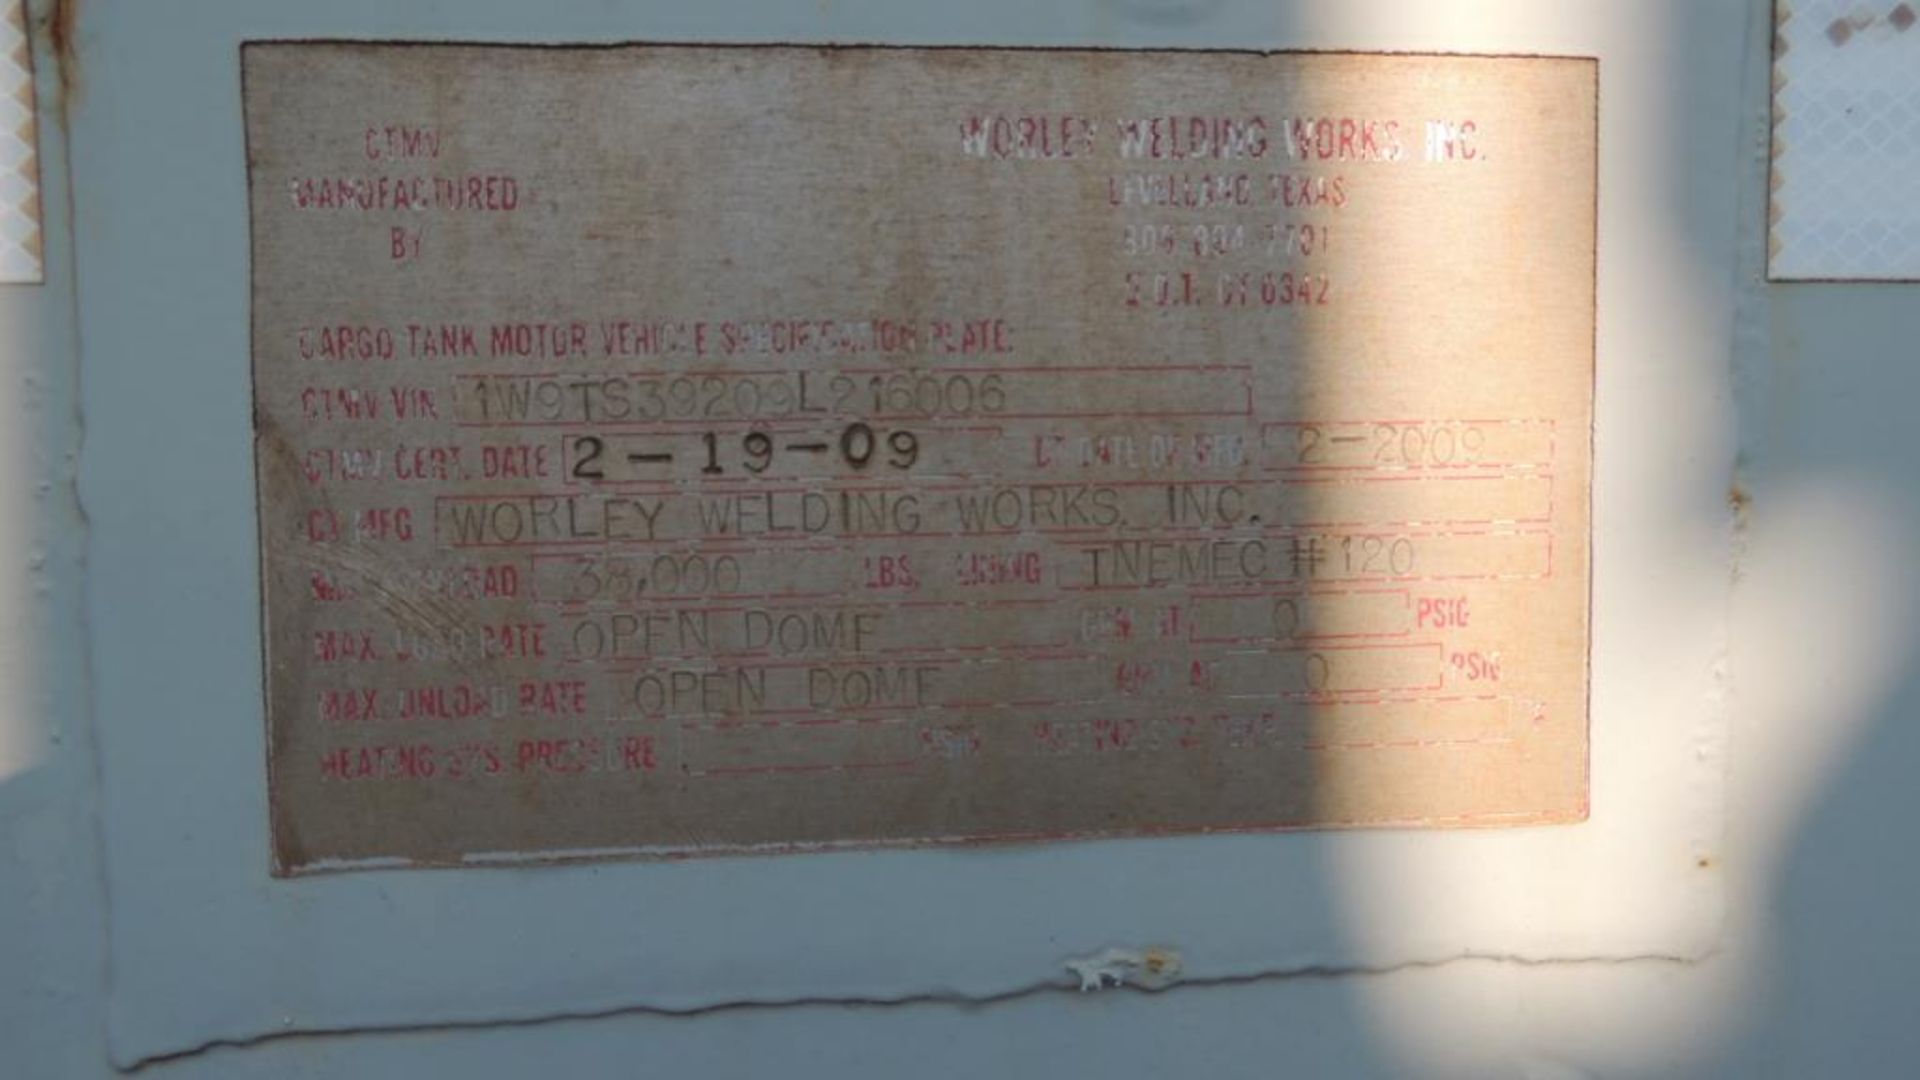 Worley Welding Works Tanker - Image 10 of 11